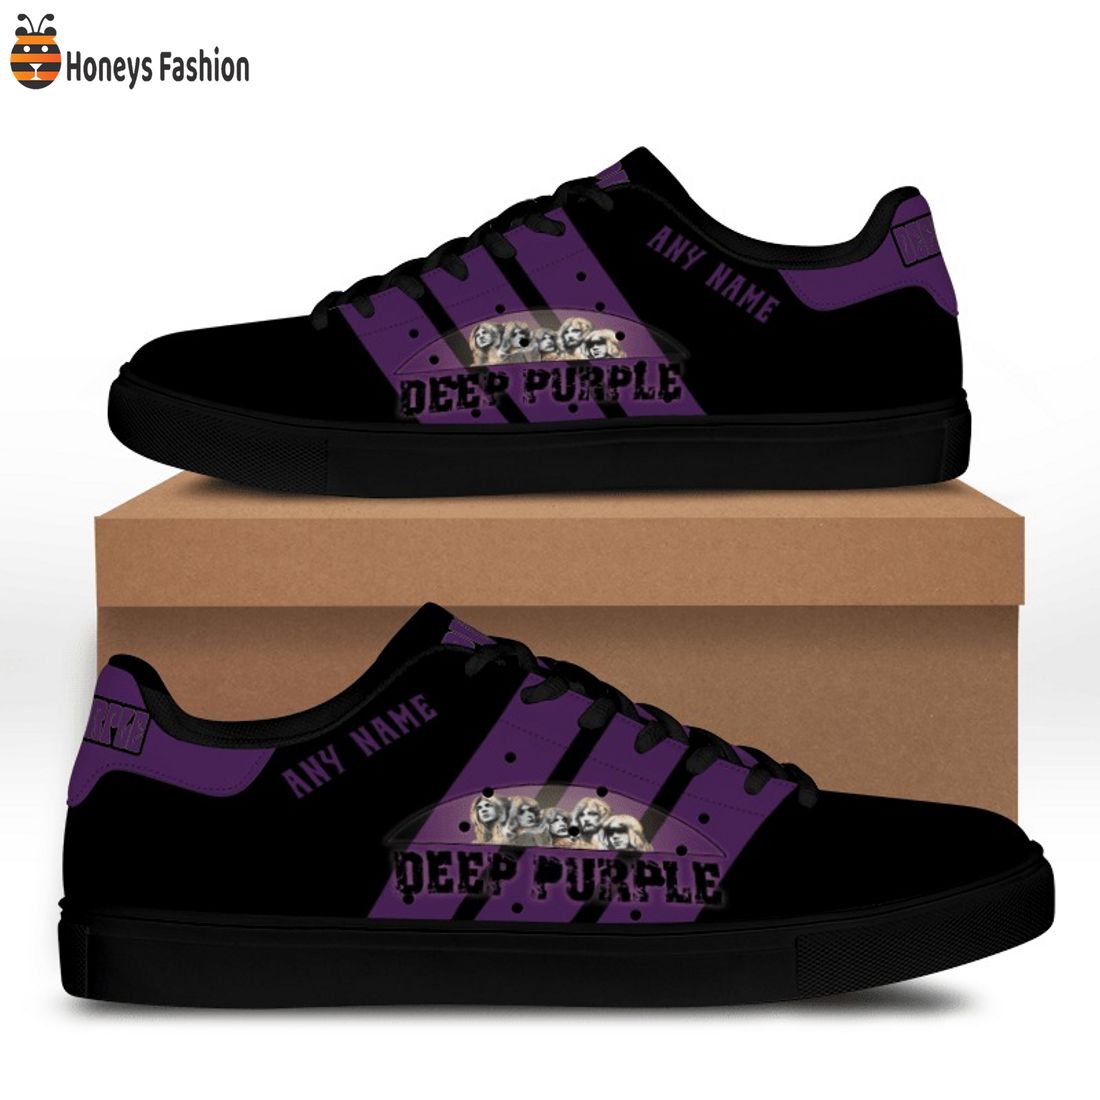 Deep Purple custom name ver 4 stan smith adidas shoes